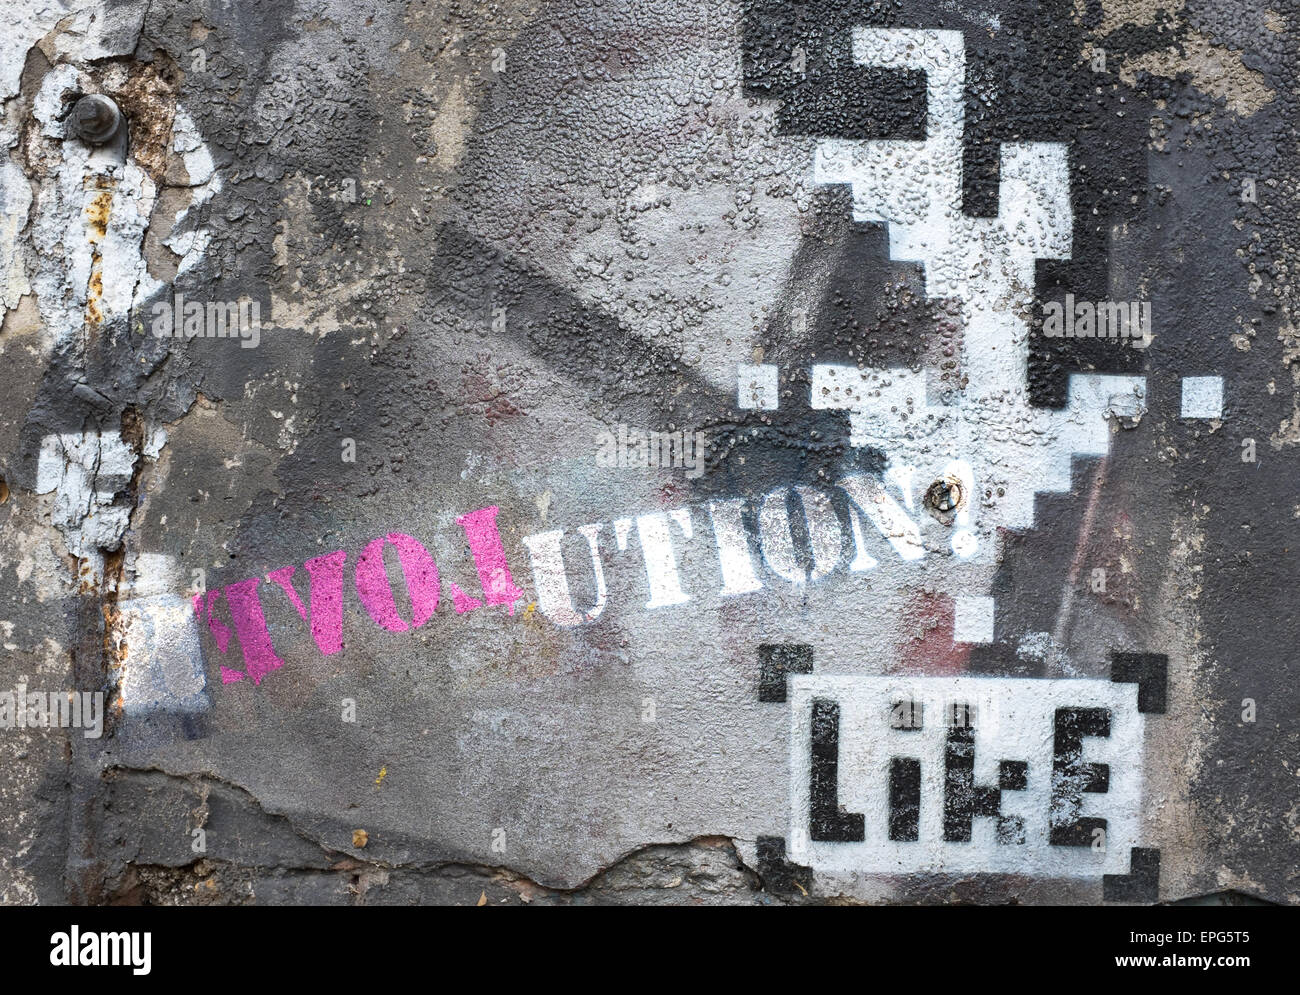 Revolution - Liebe Graffiti Logo auf strukturierte Wand Stockfoto